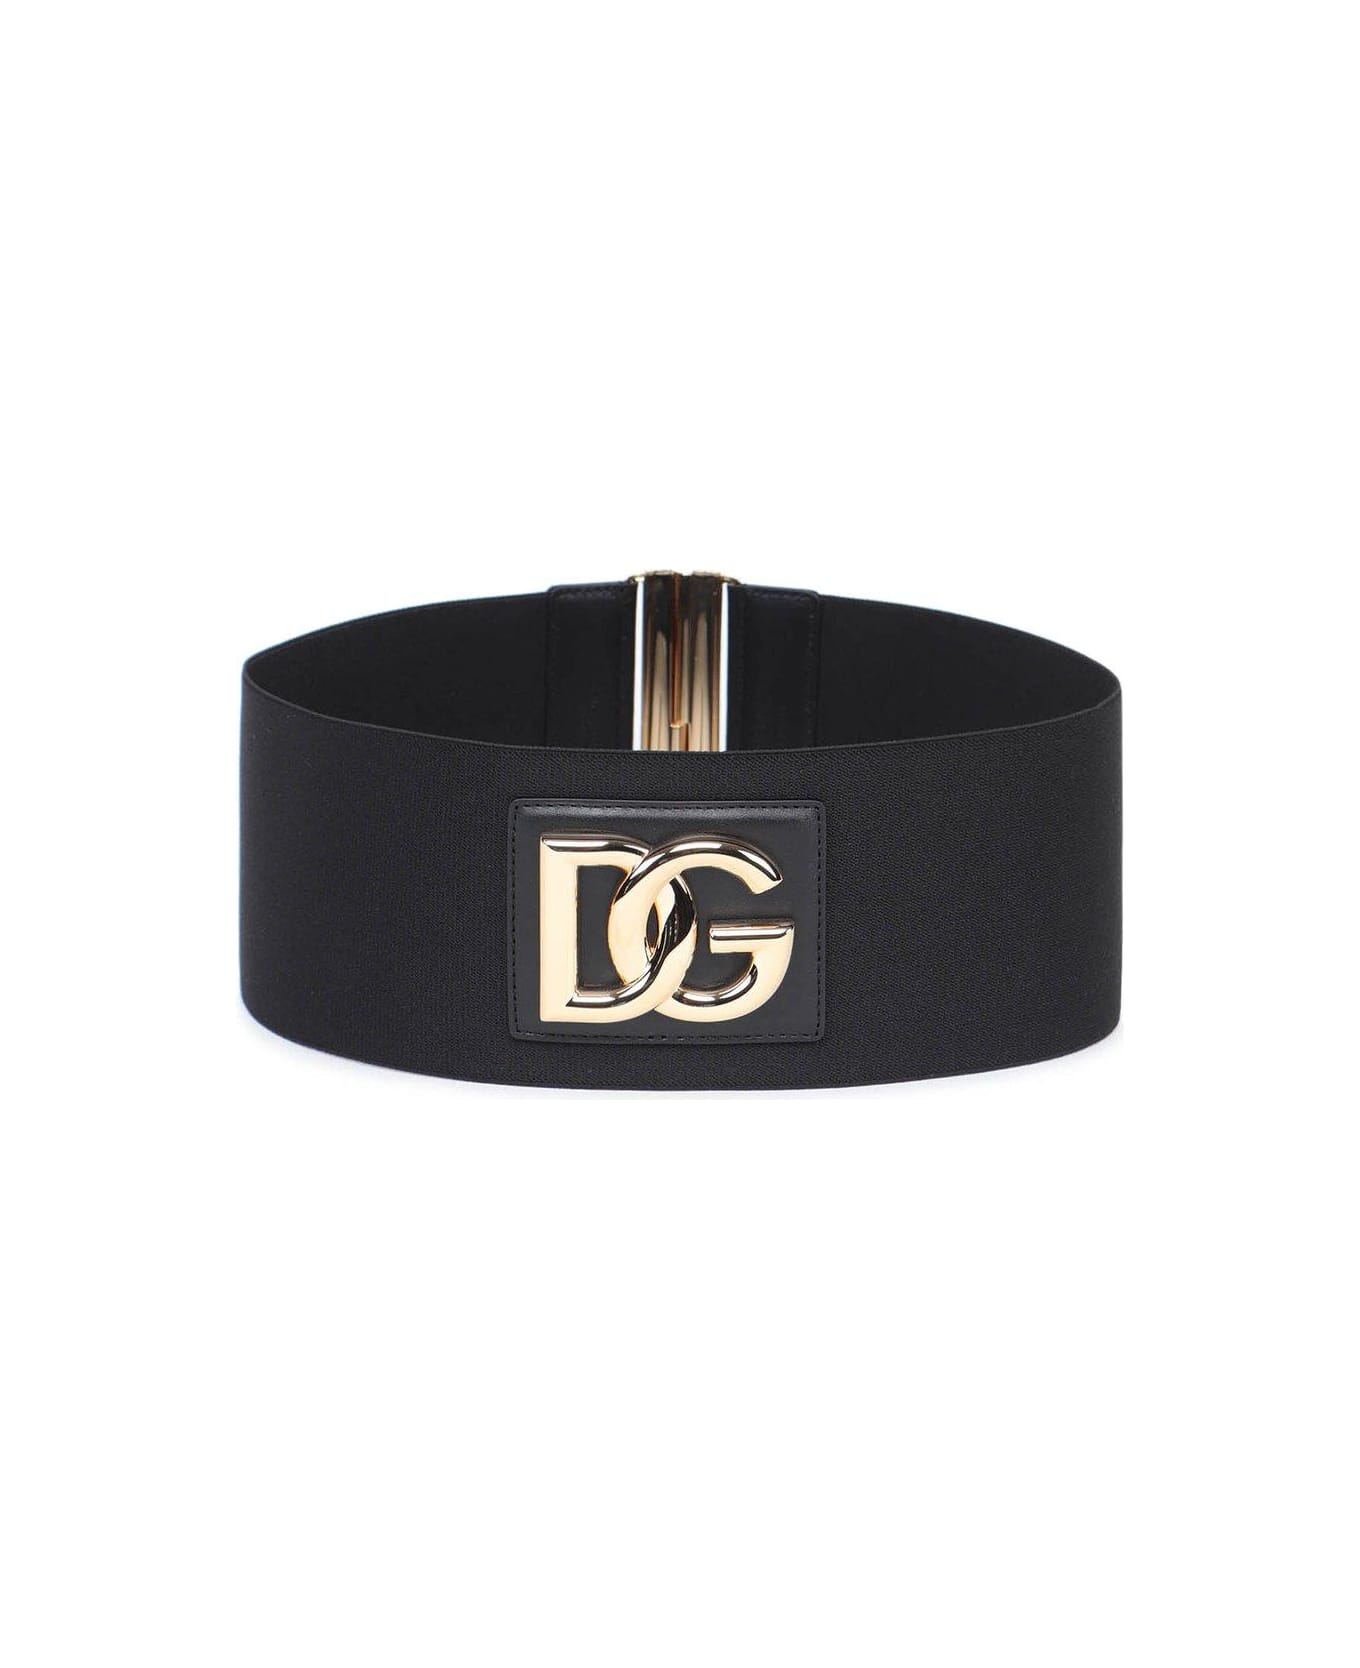 Dolce & Gabbana Dg Stretch Band Belt - Nero/nero